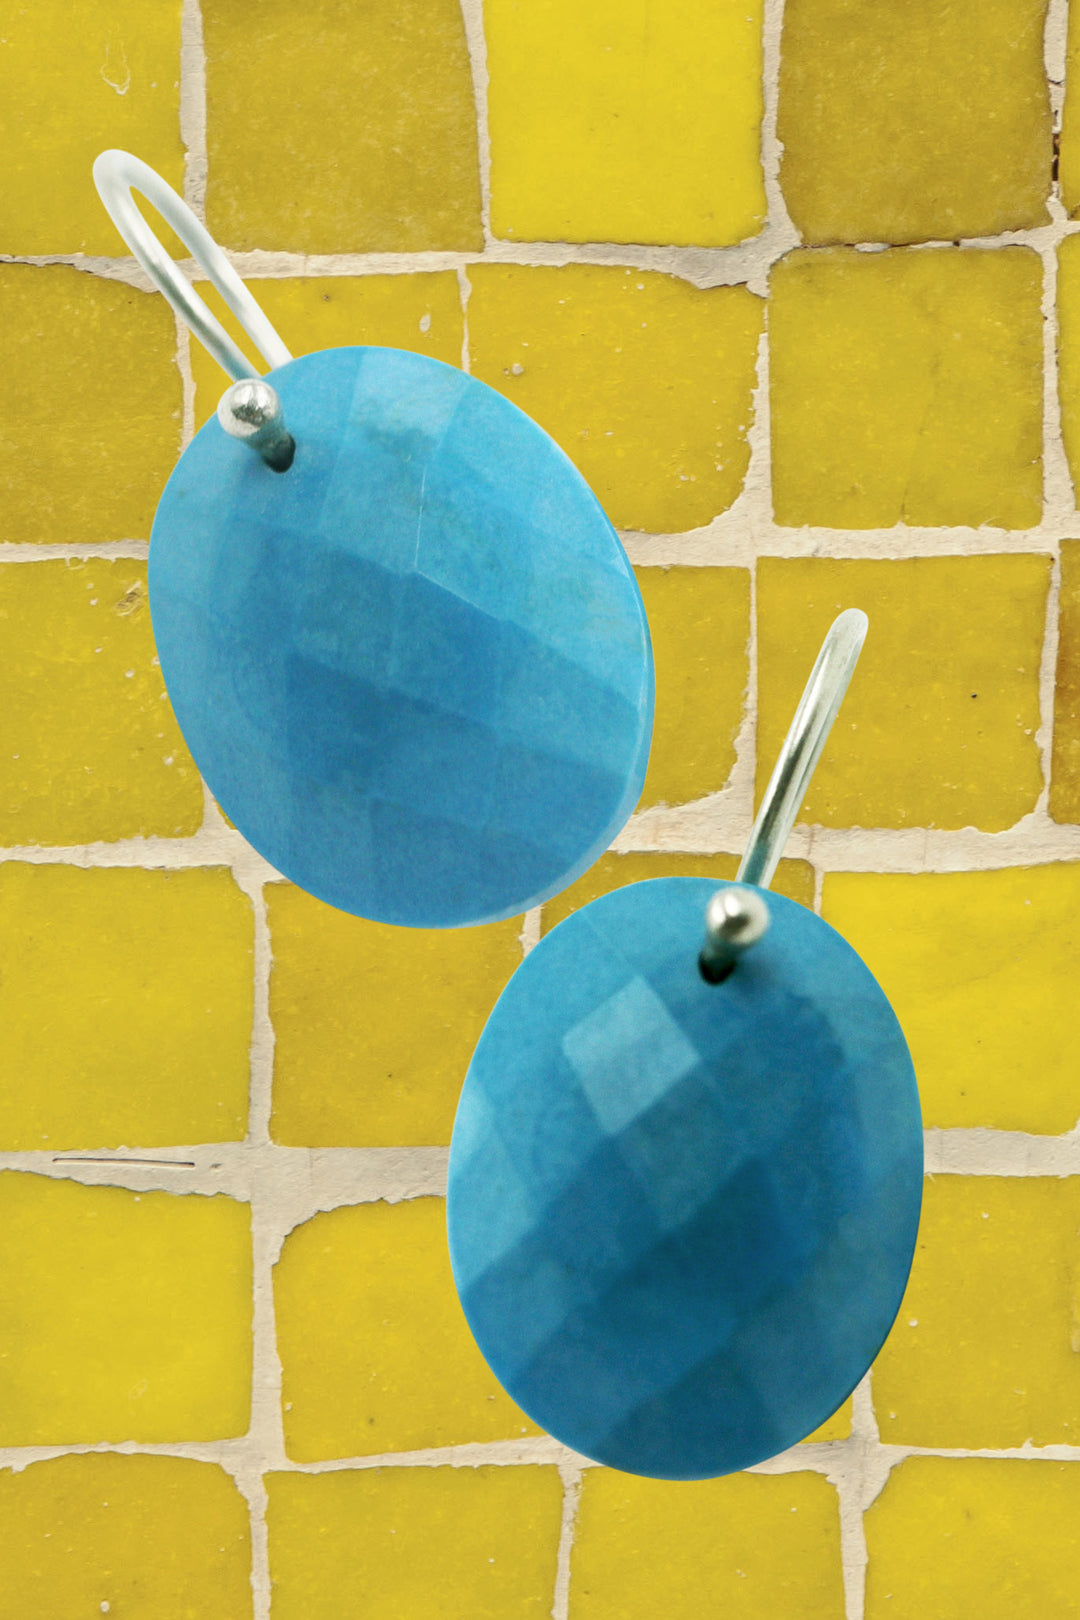 Turquoise Oval Drop Earrings